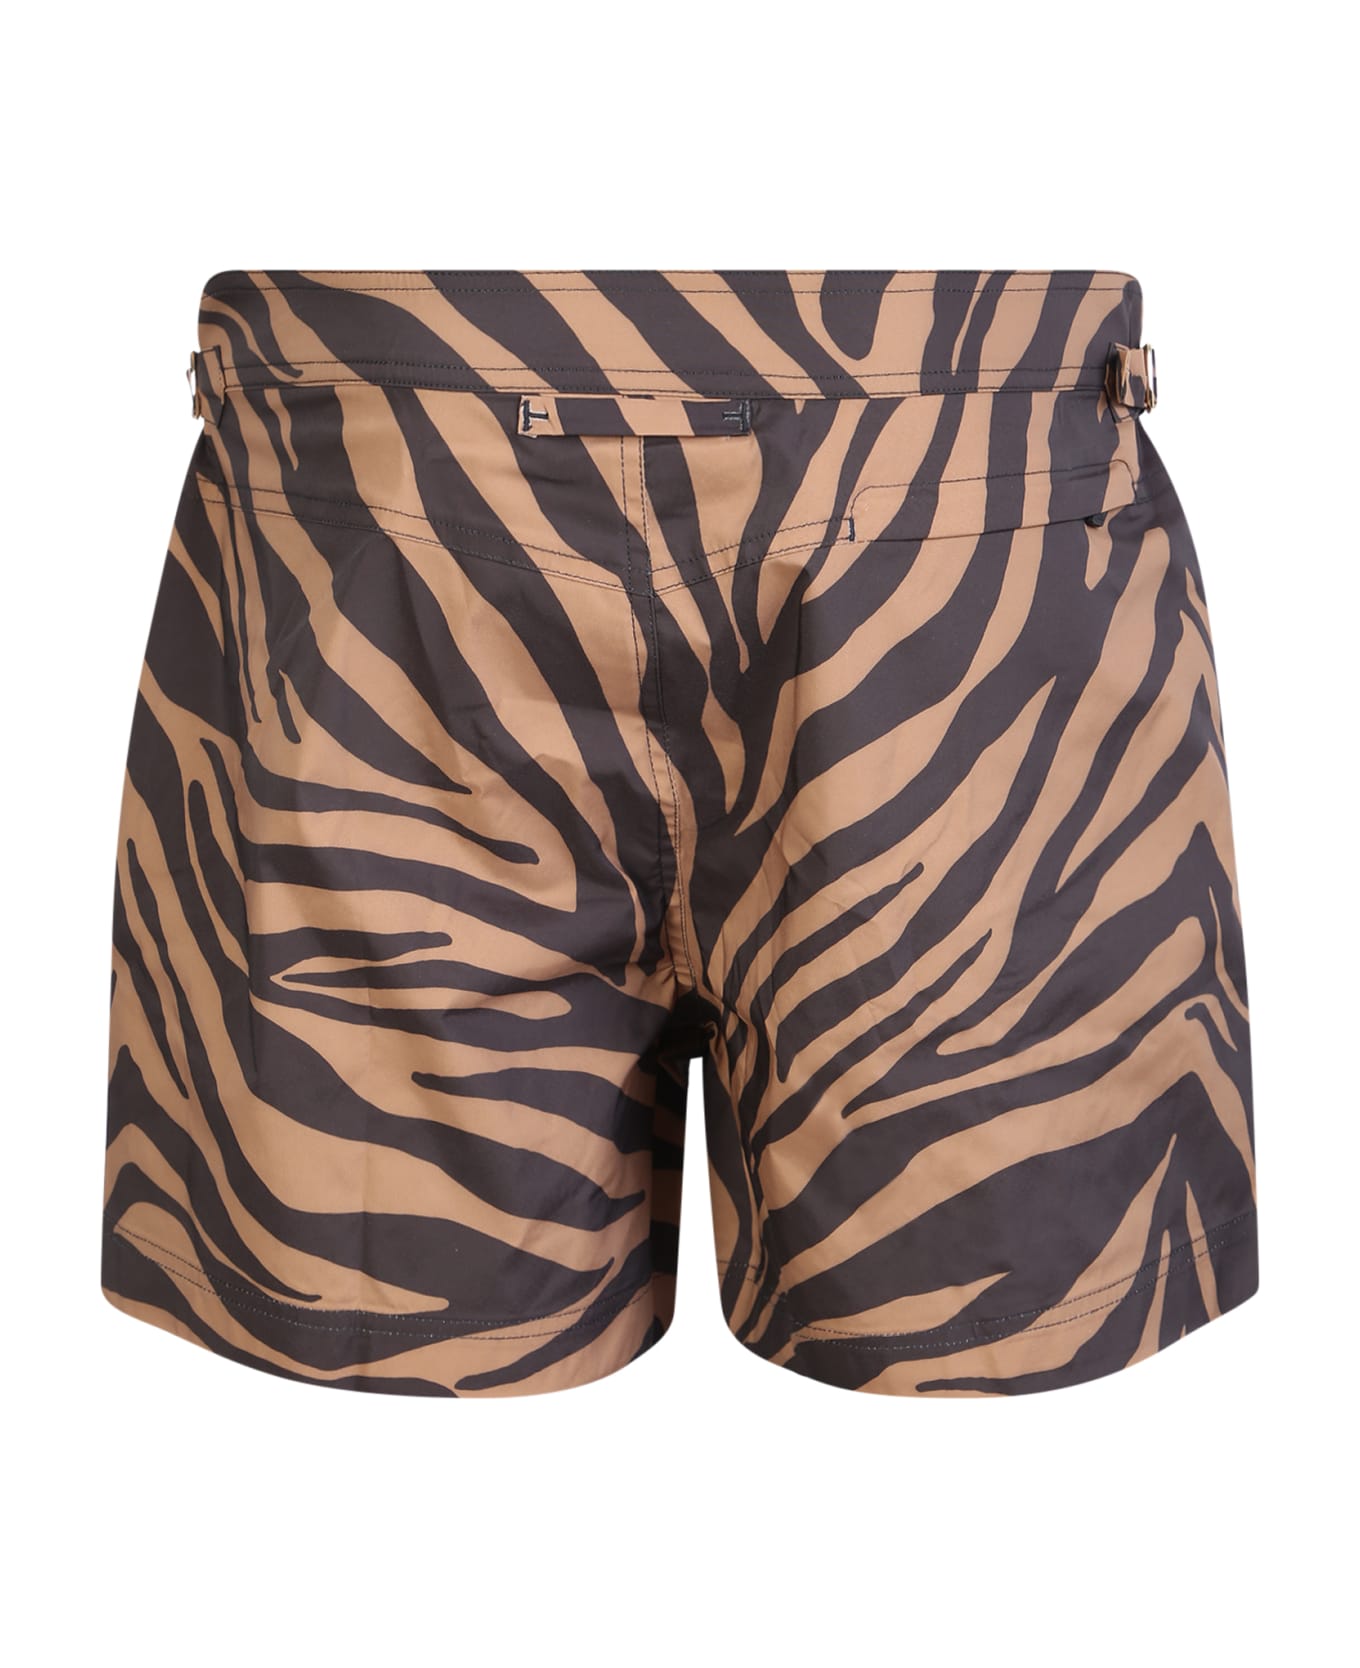 Tom Ford Zebra Print Swim Shorts - Beige